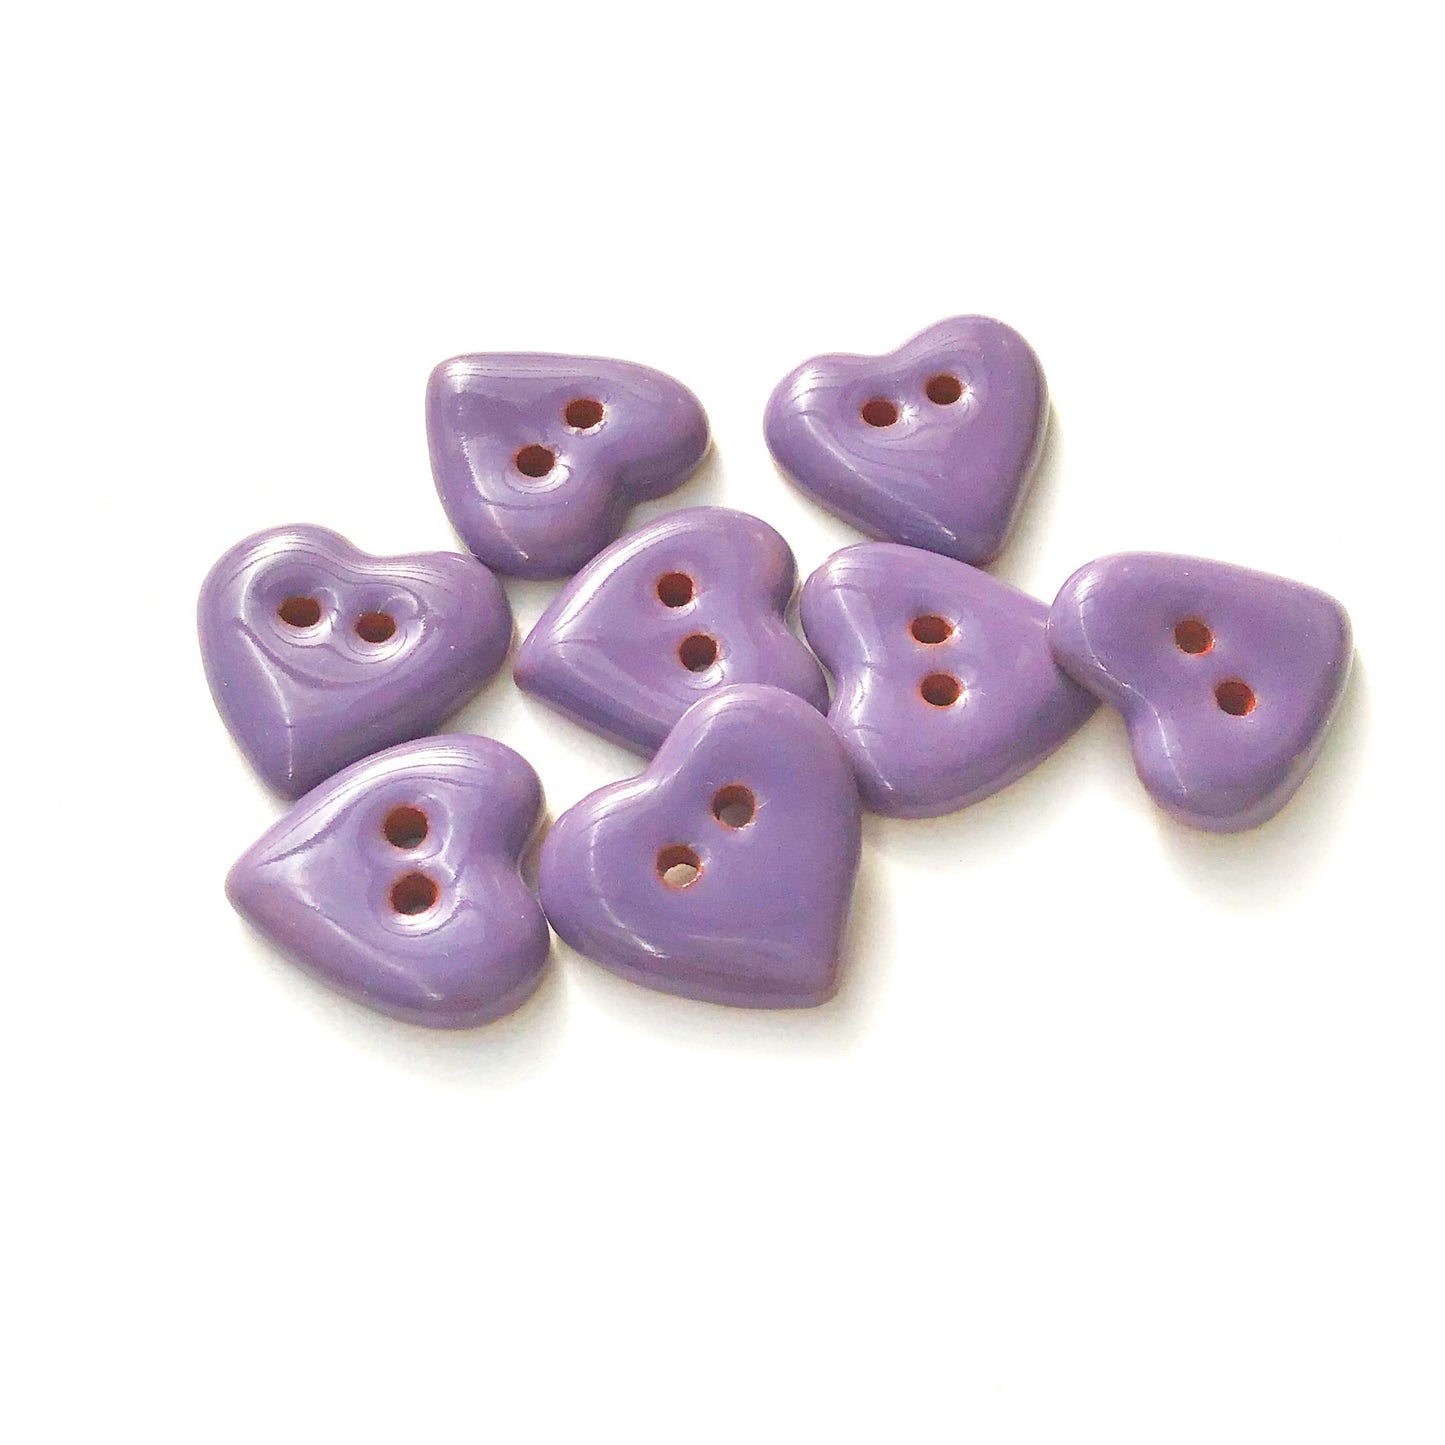 Purple Heart Buttons - Ceramic Heart Buttons - 5/8" - 8 Pack (ws-174)